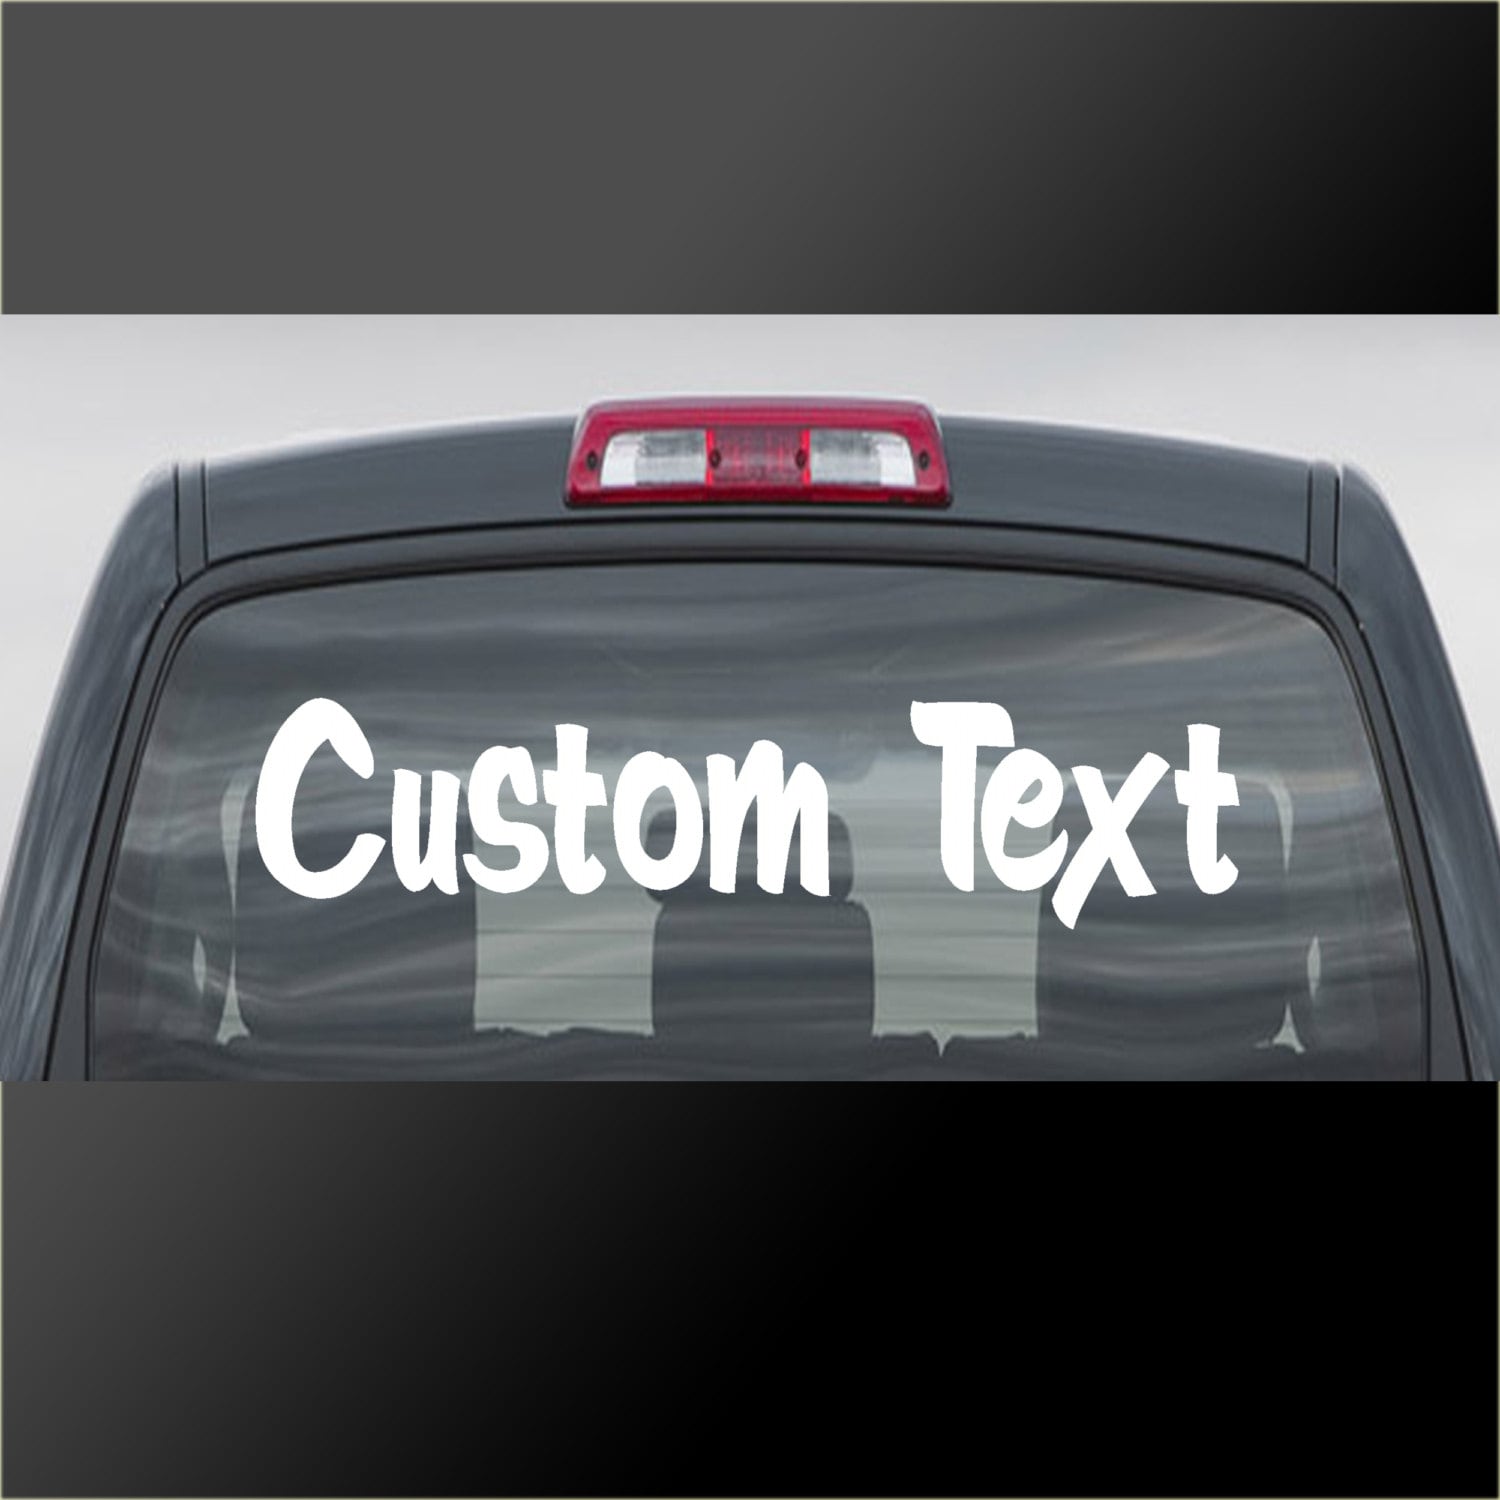 Custom Text Personalised Name Lettering Car Van Window Shop Decal Sticker